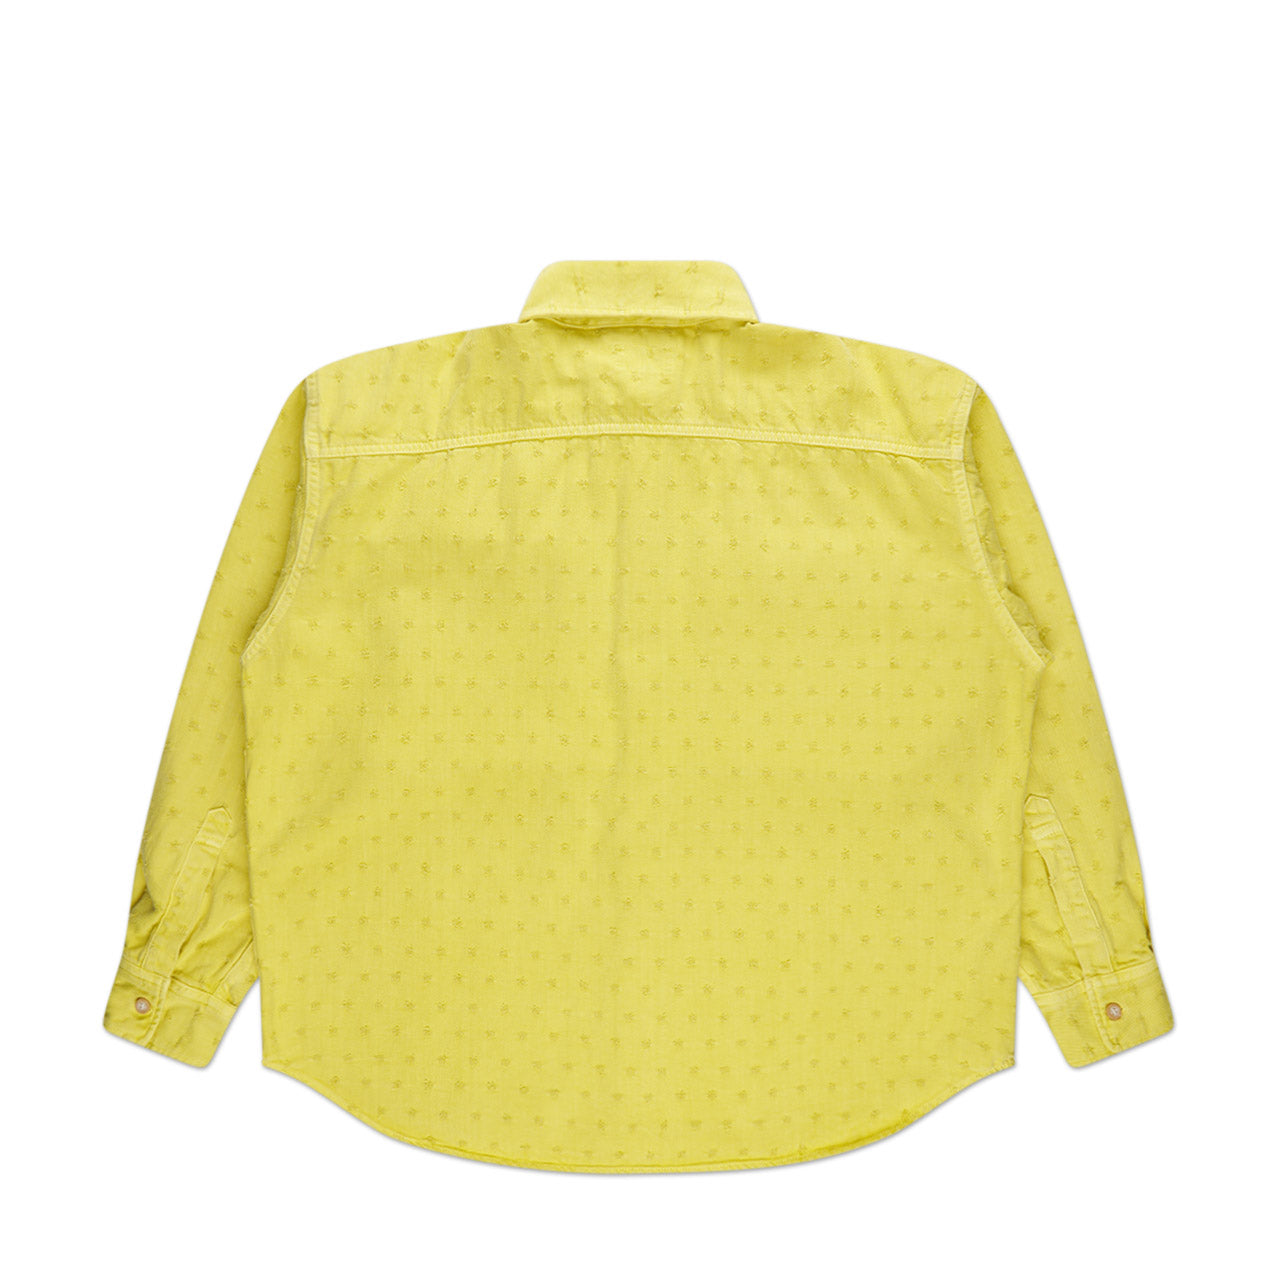 cav empt overdye maj dam shirt (yellow) - a.plus store